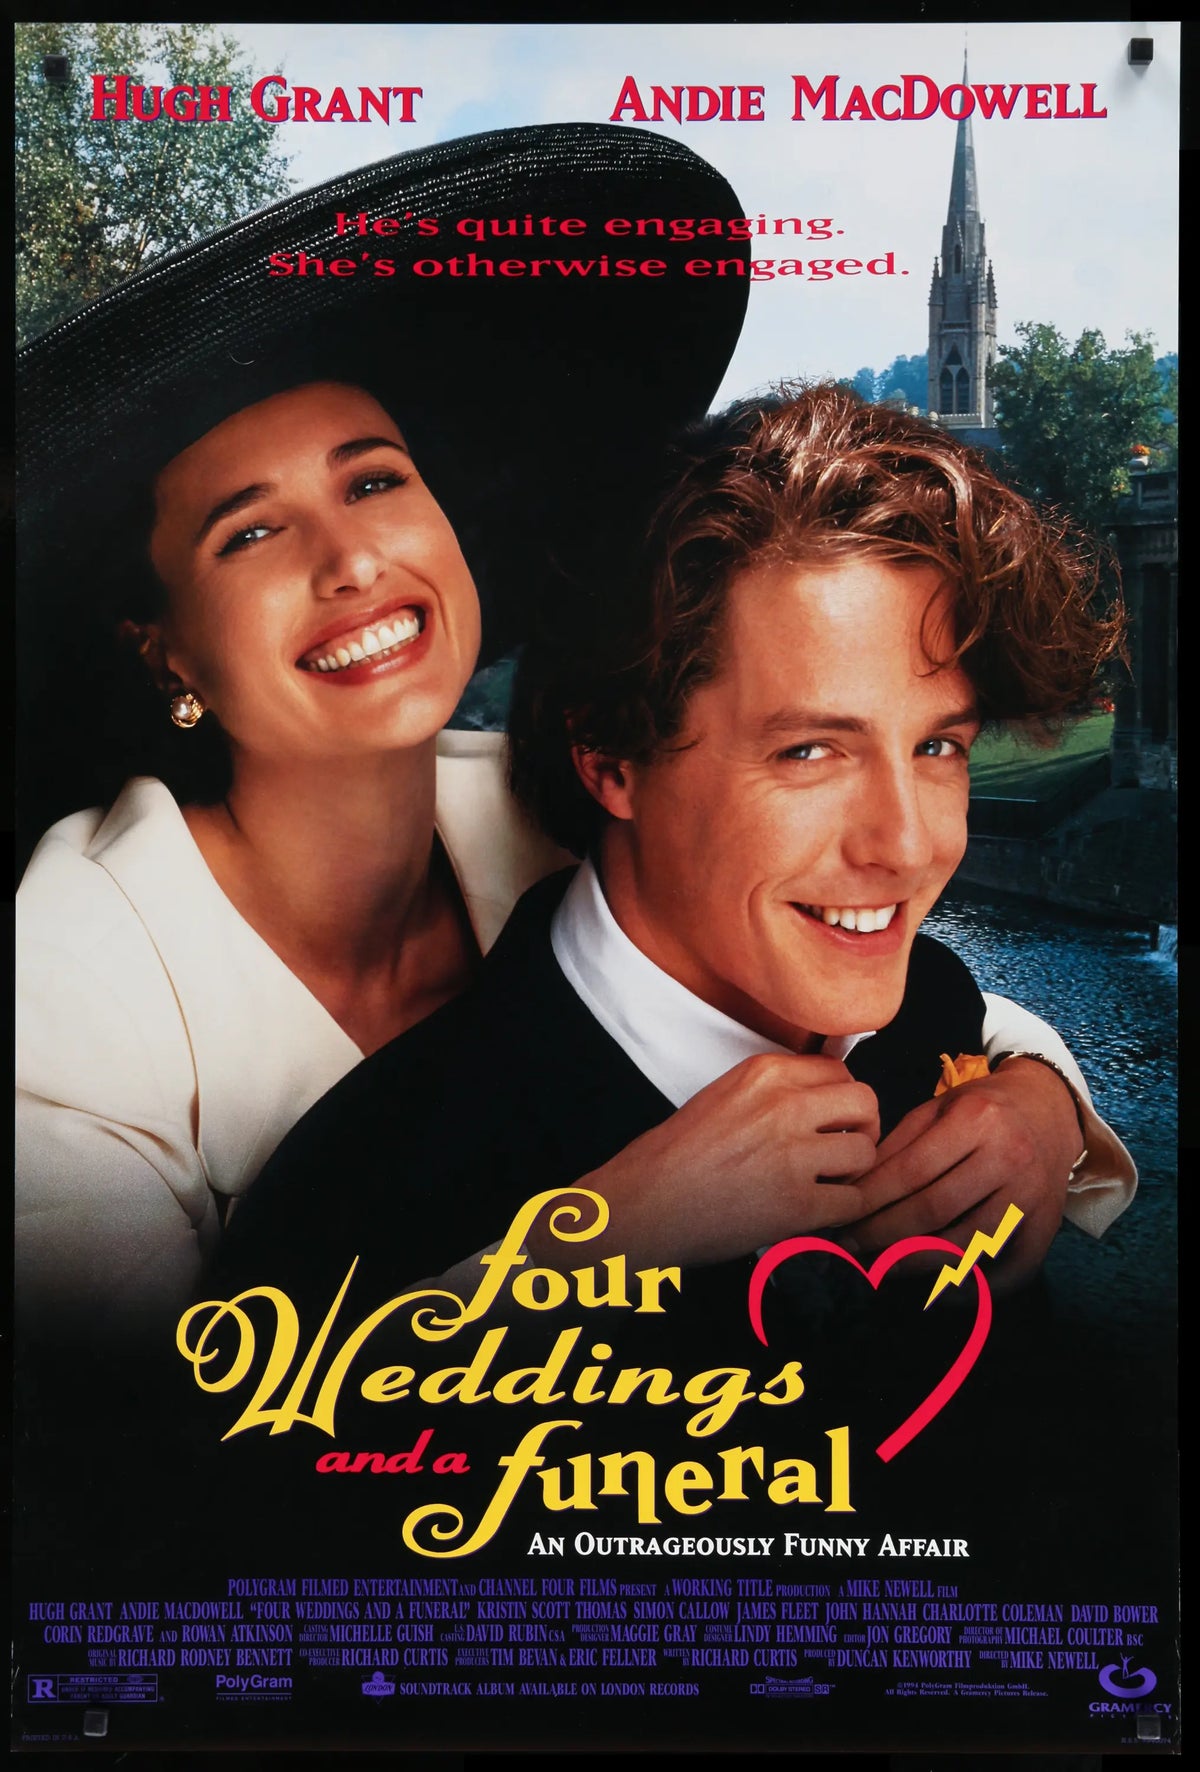 Four Weddings and a Funeral (1994) original movie poster for sale at Original Film Art